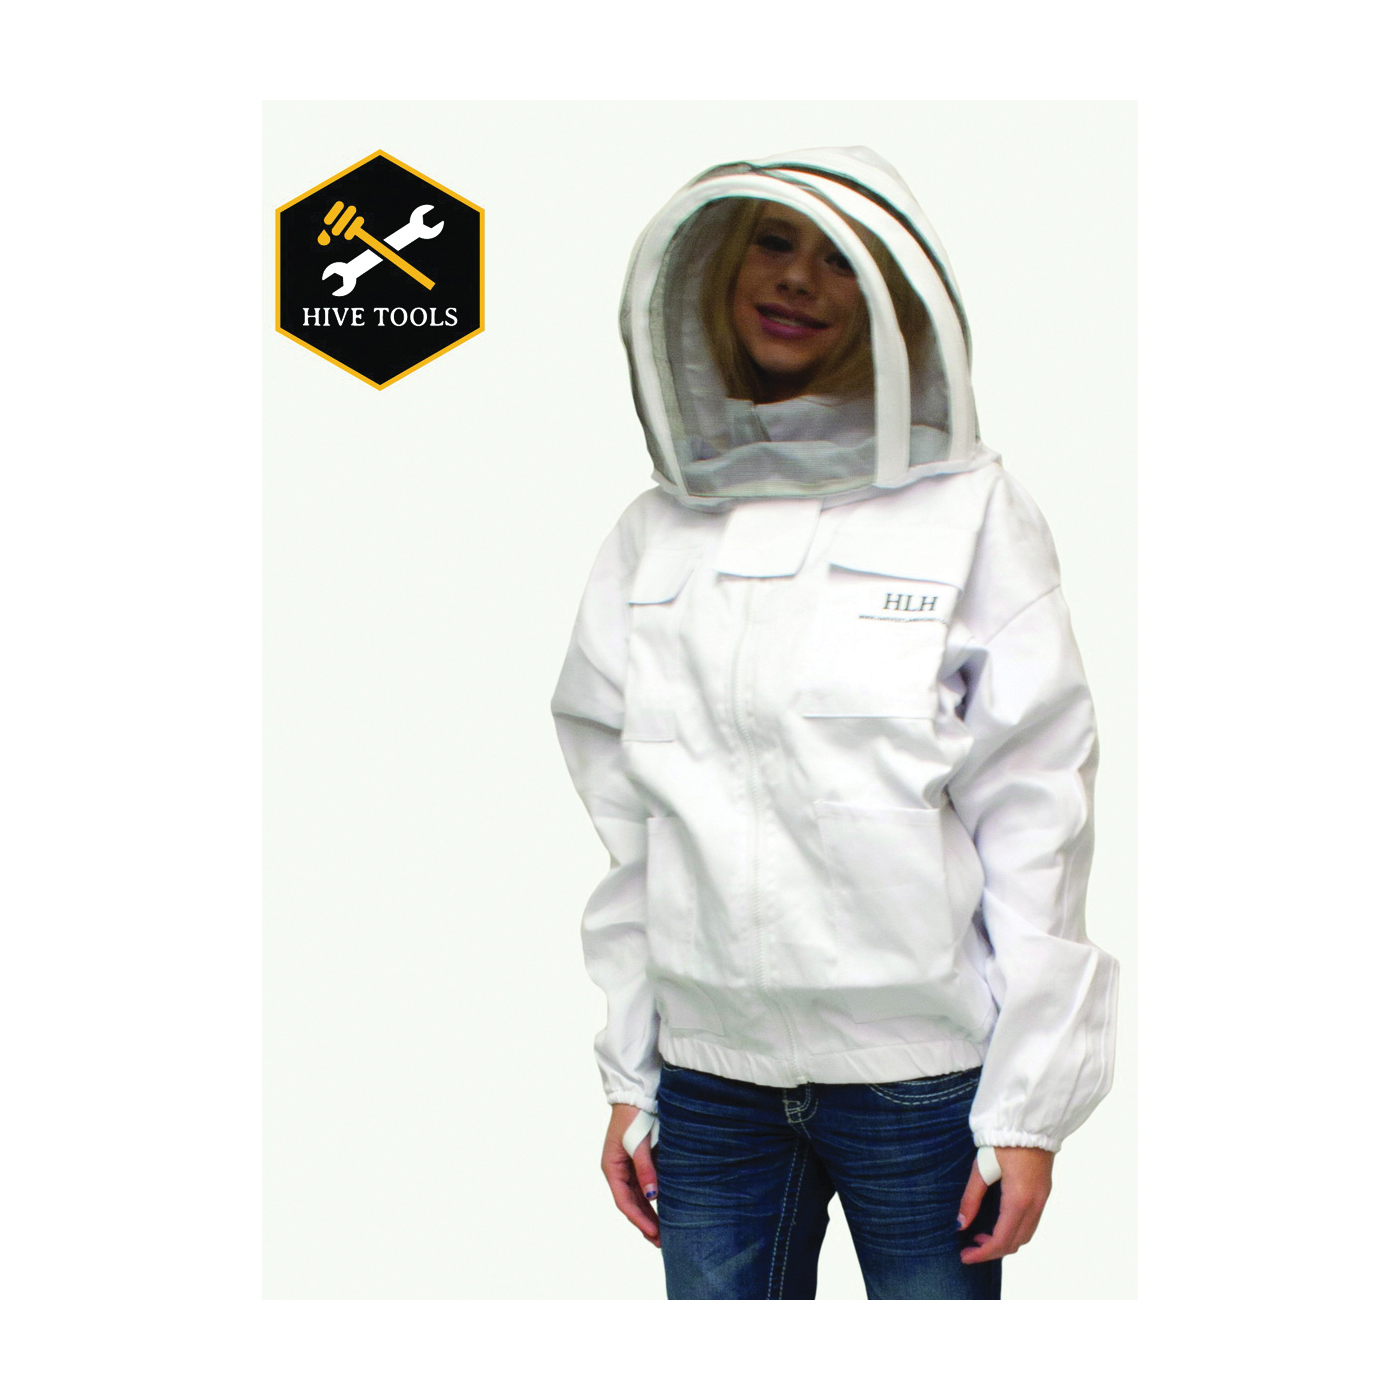 CLOTHSJXL-102 Beekeeper Jacket with Hood, XL, Zipper Closure, Polycotton, White